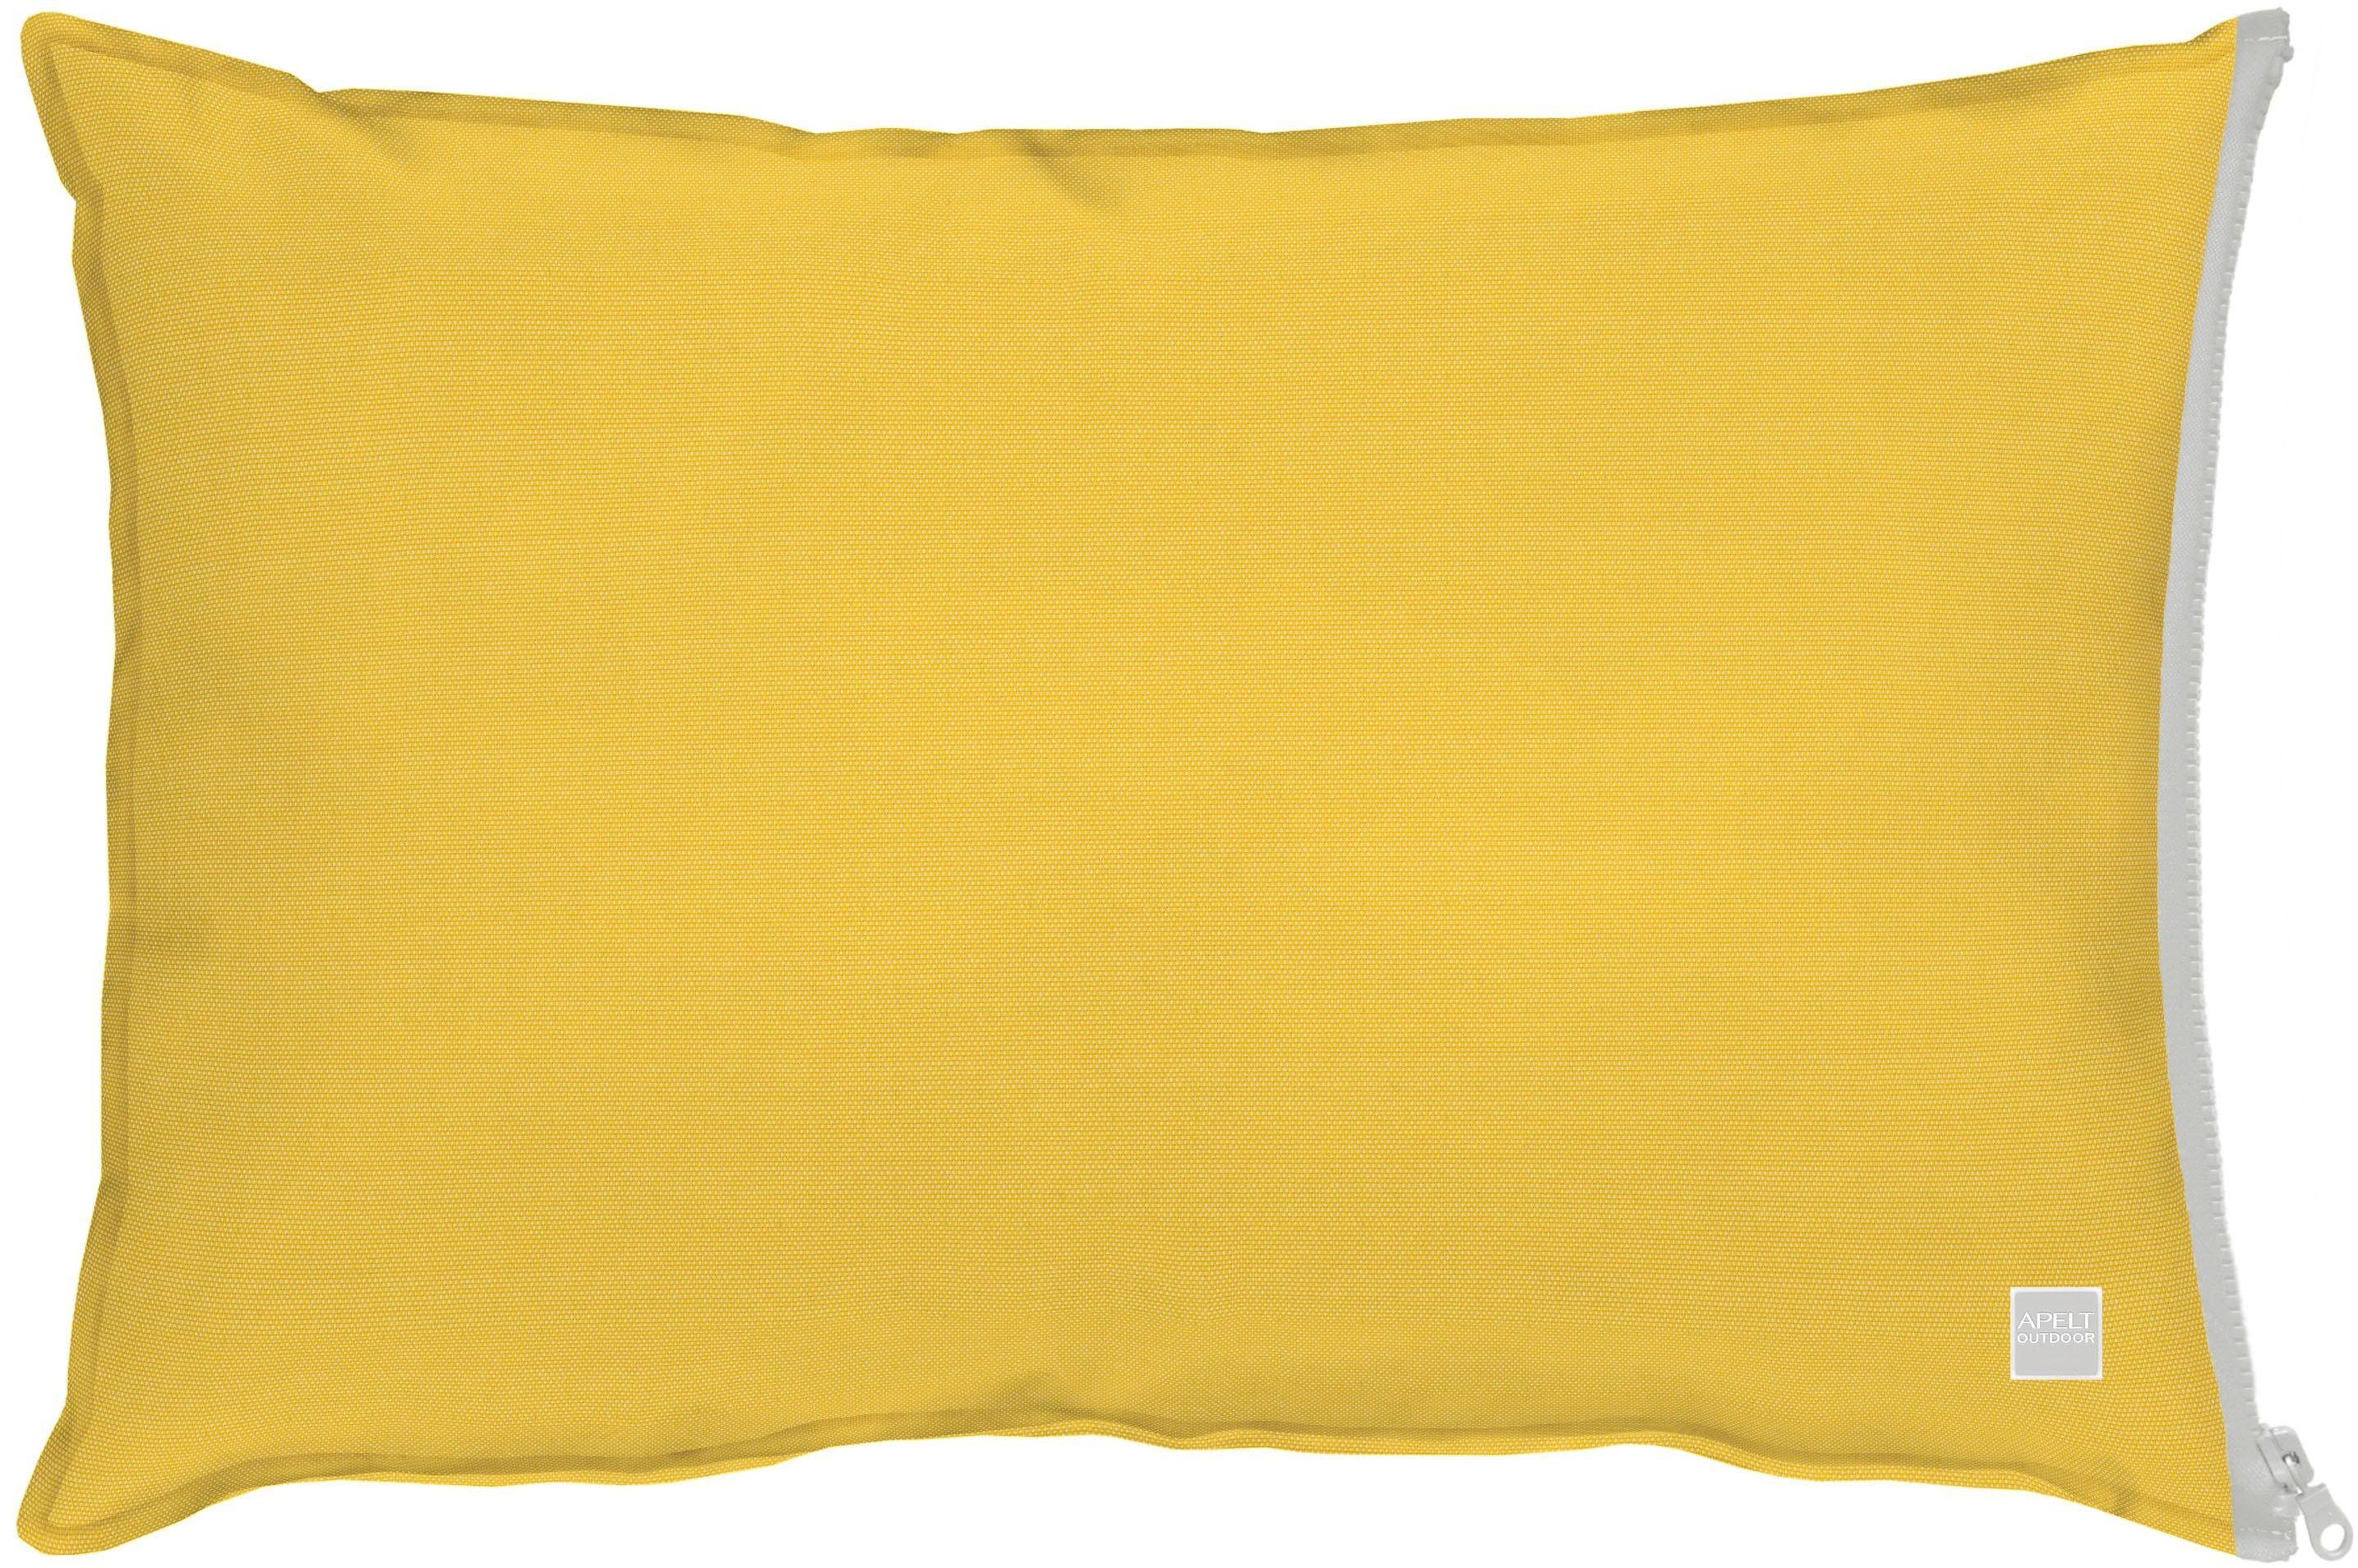 APELT Stück ohne Kissenhülle (1 Stück), 1 Kissenhülle Füllung, 3959, gelb